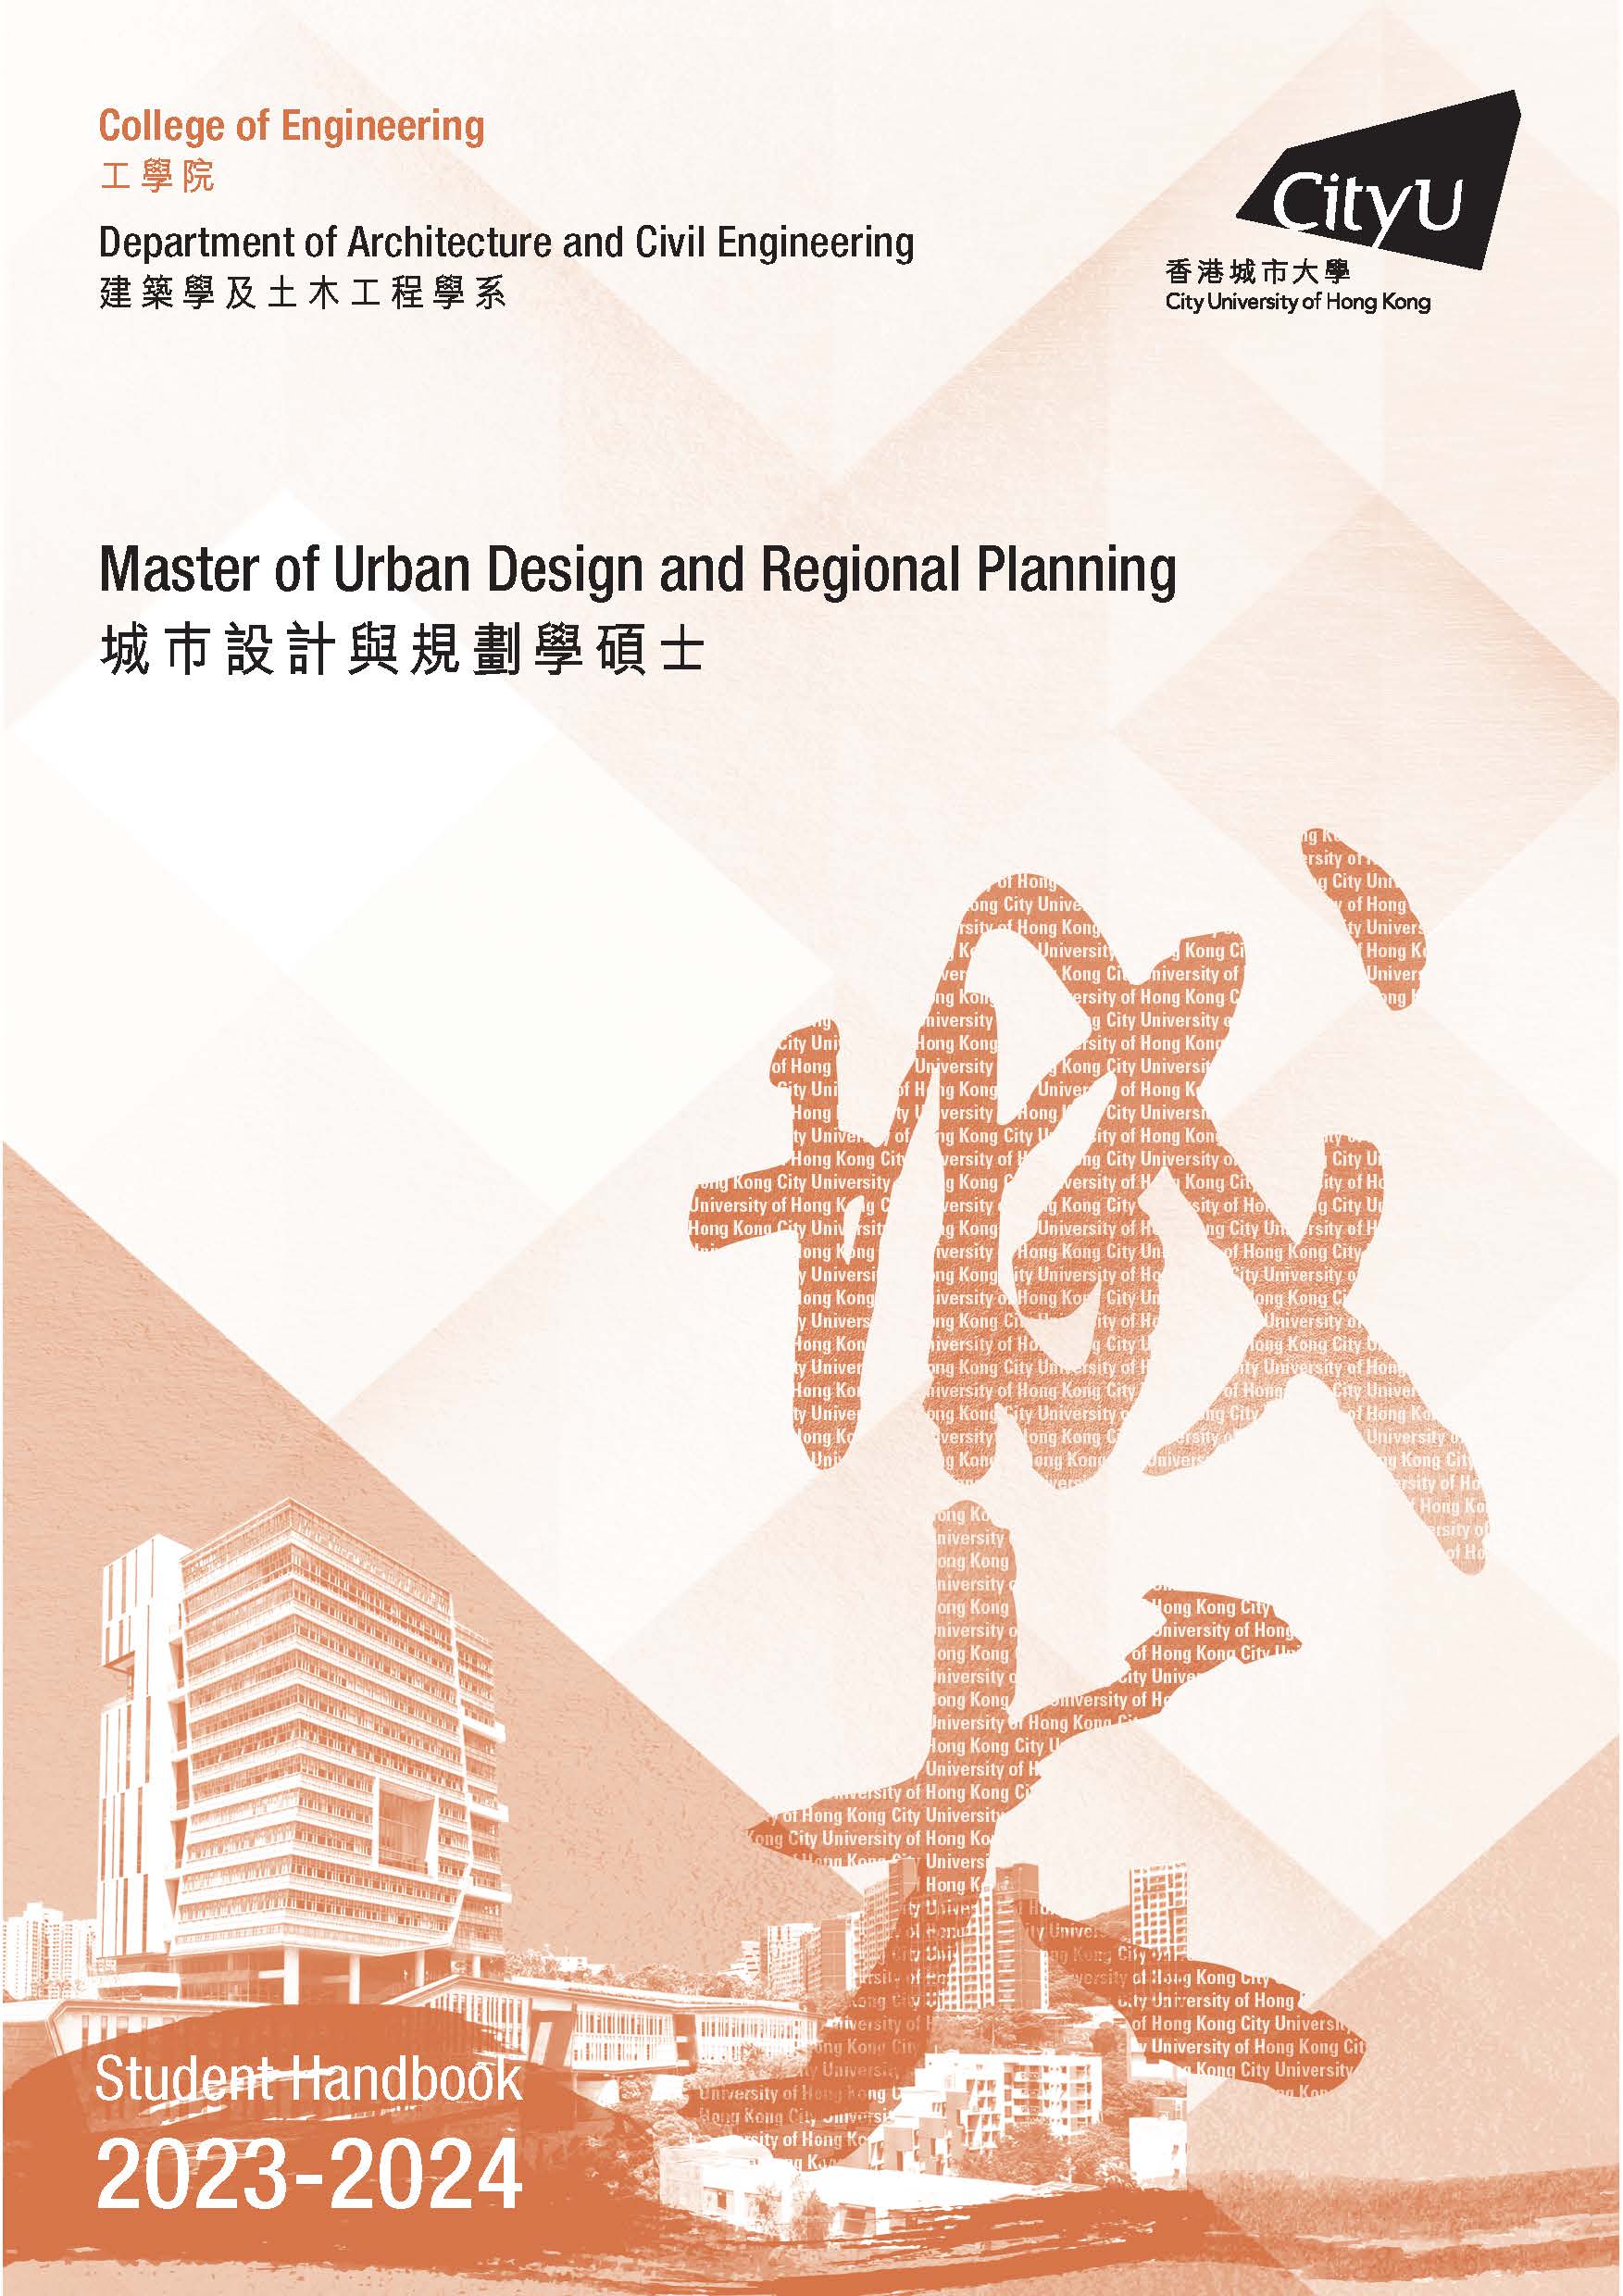 Student Handbook 2023/2024 (Master of Urban Design and Regional Planning)